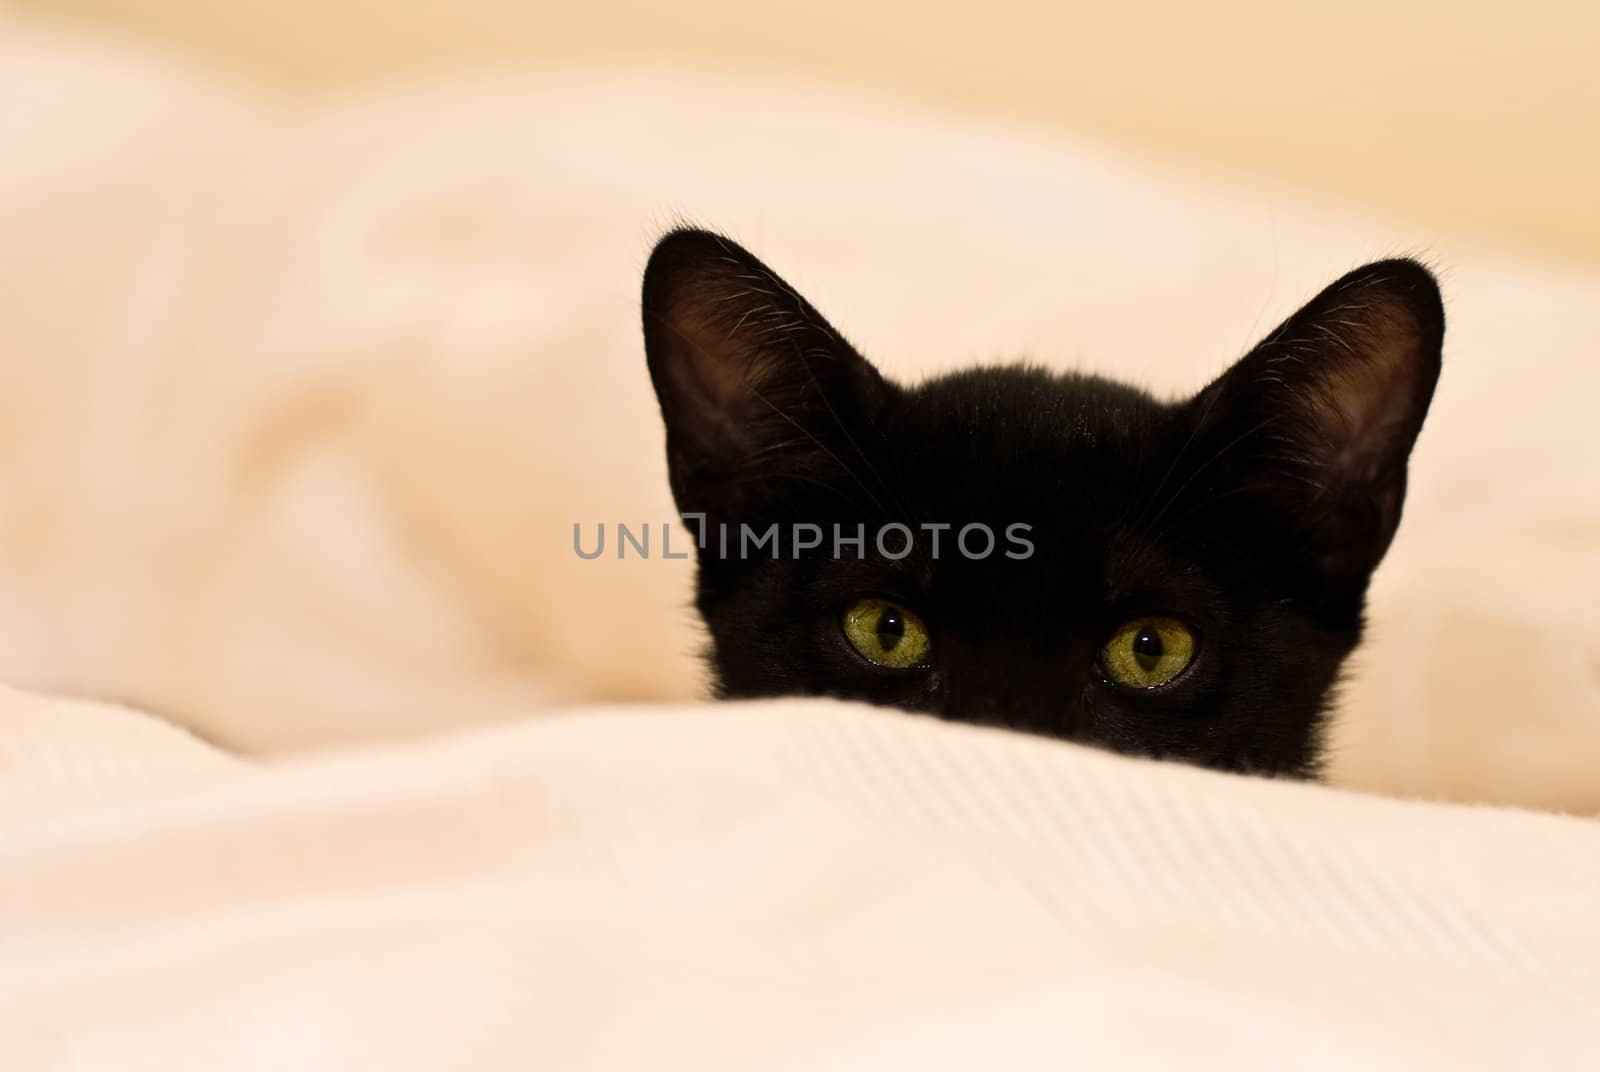 small black kitten is hiding on the blanket. Shallow DOF, focus on eyes